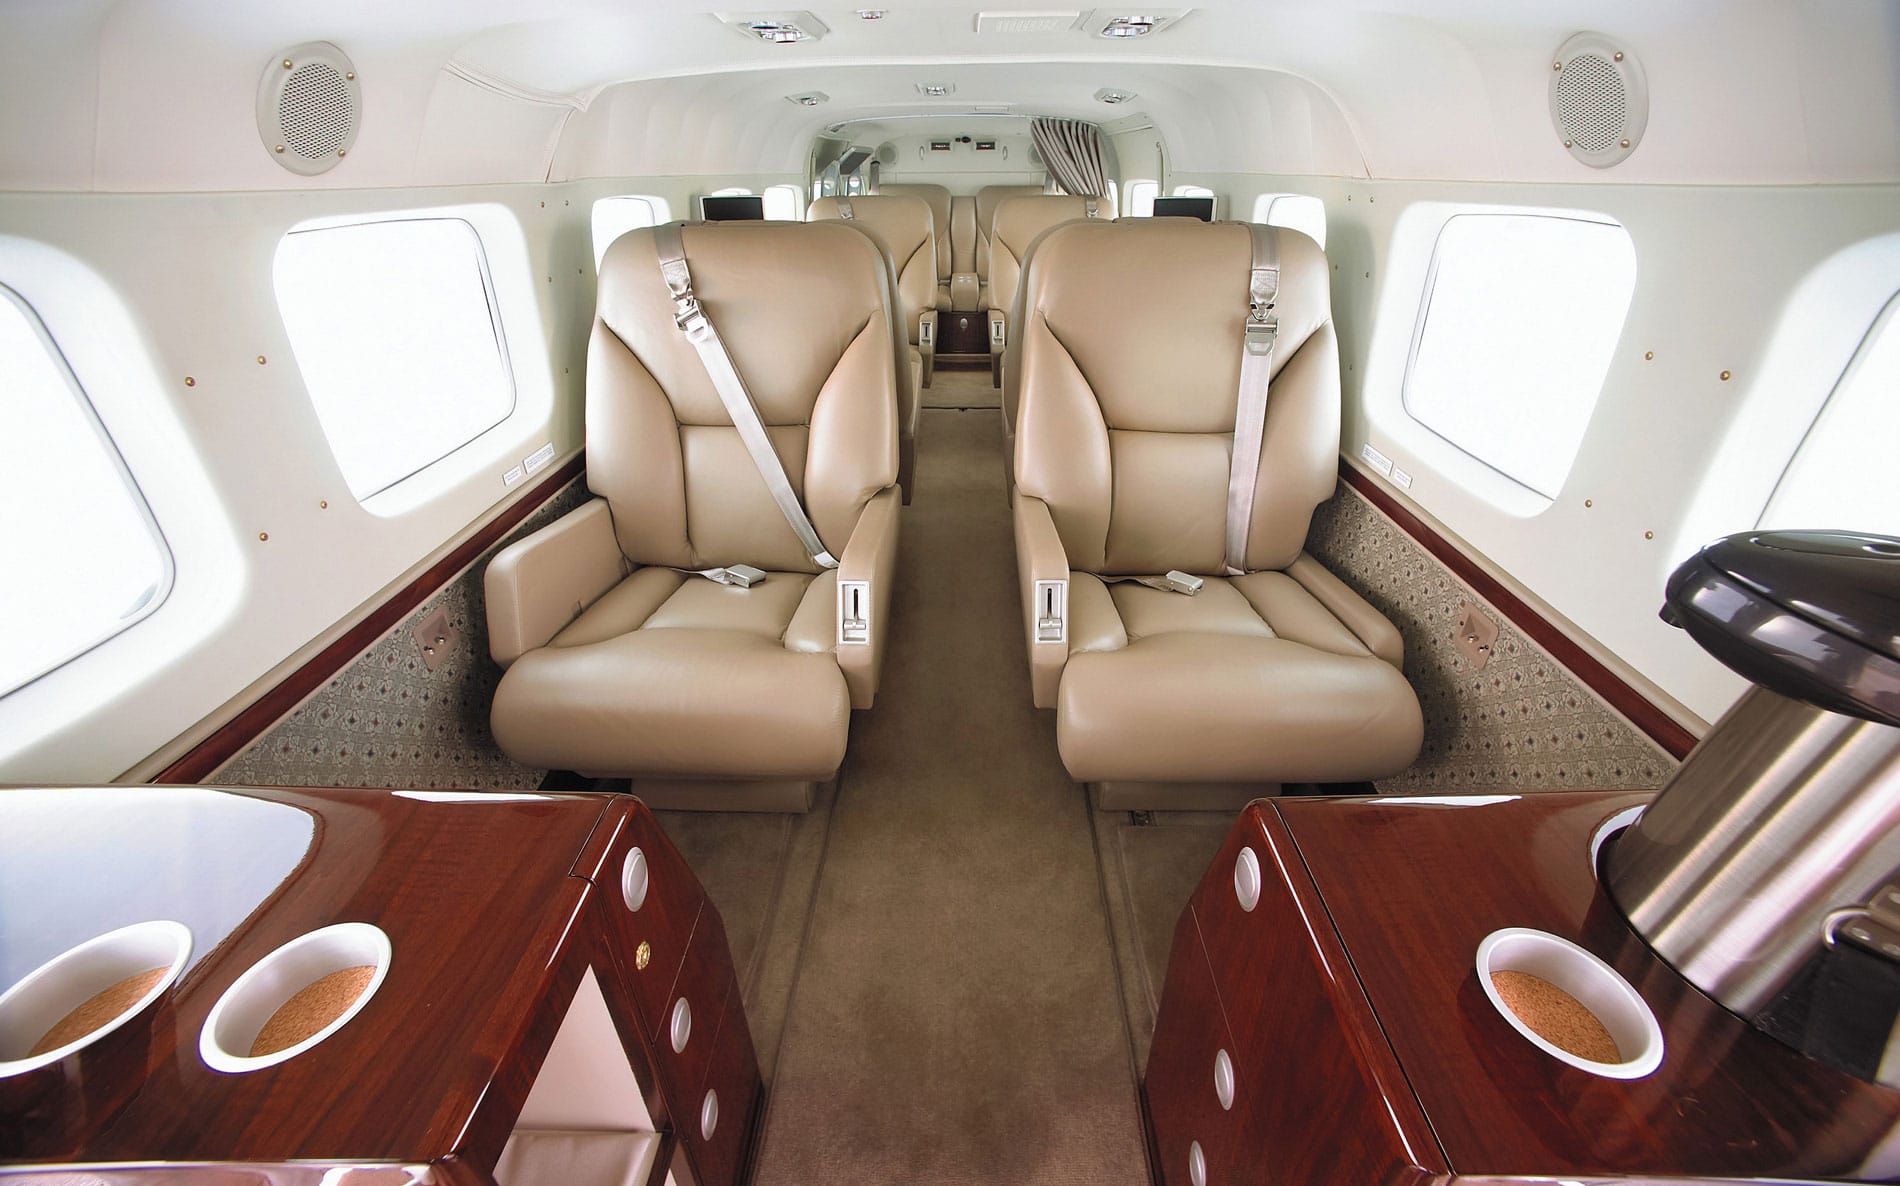 The Cessna Caravan Interior